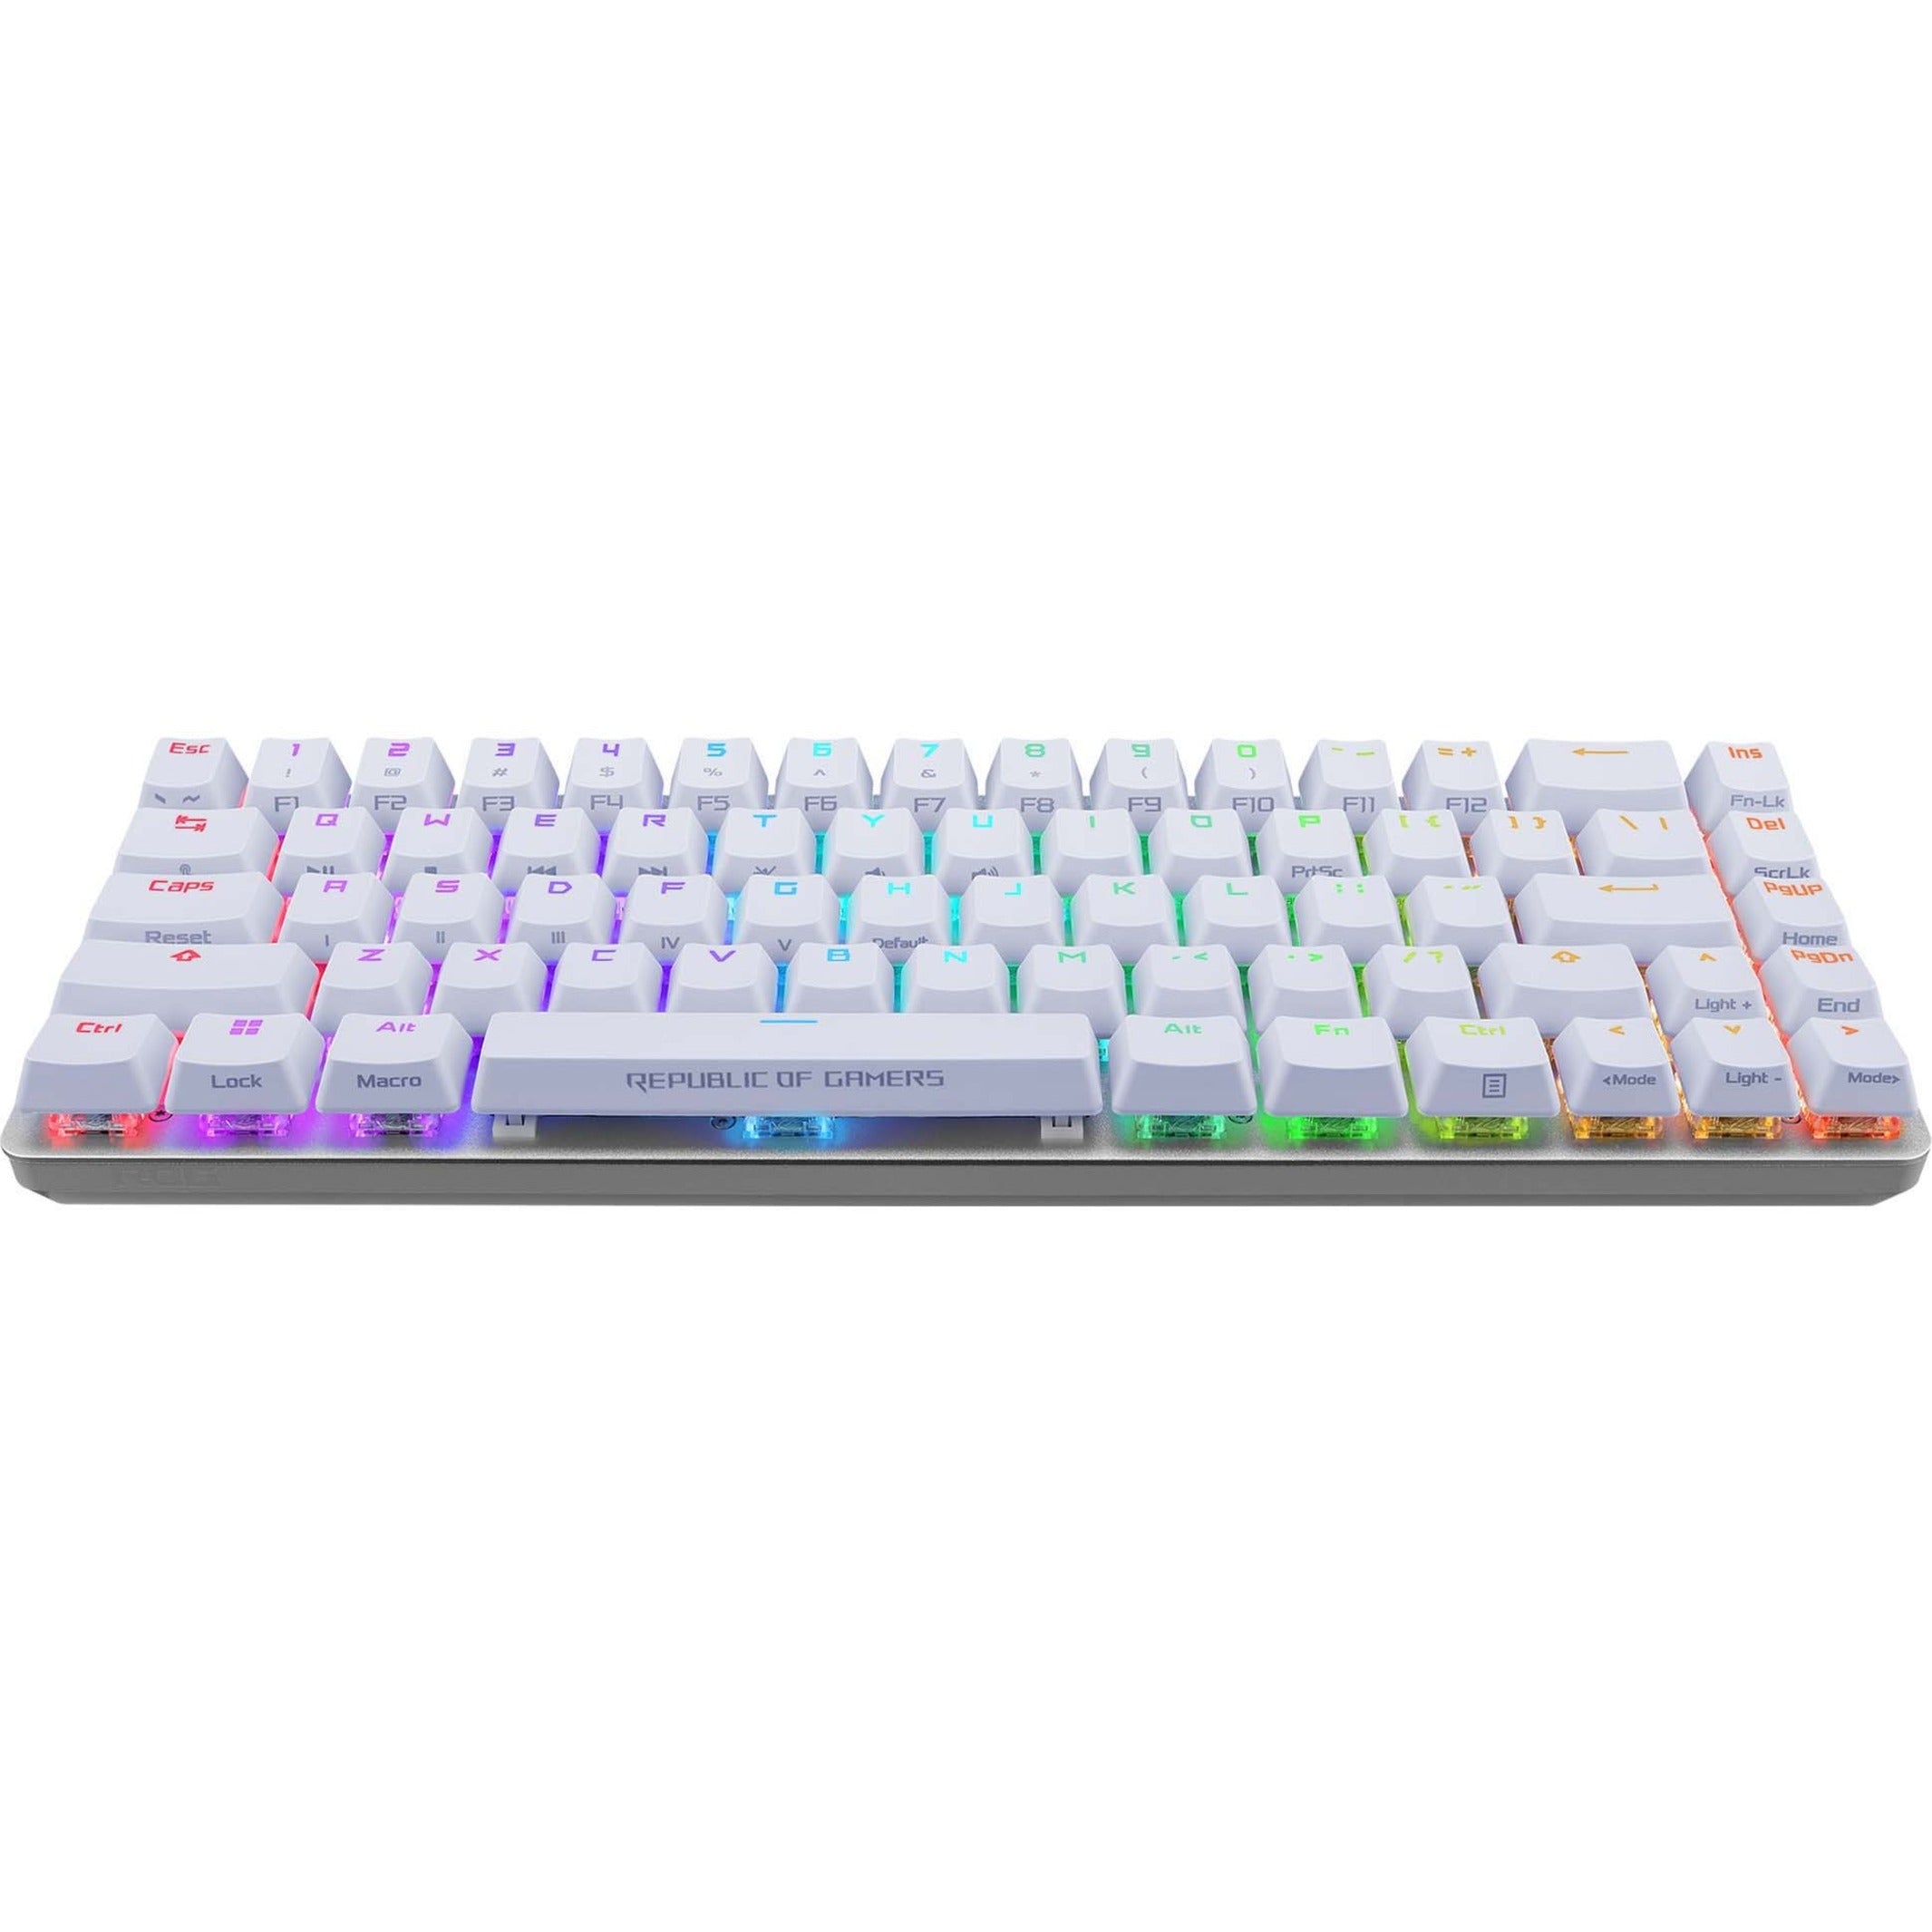 Asus ROG M602FALCHIONACE/NXRD/WHT Falchion Ace Gaming Keyboard, RGB LED Backlight, Mechanical Keyswitch Technology